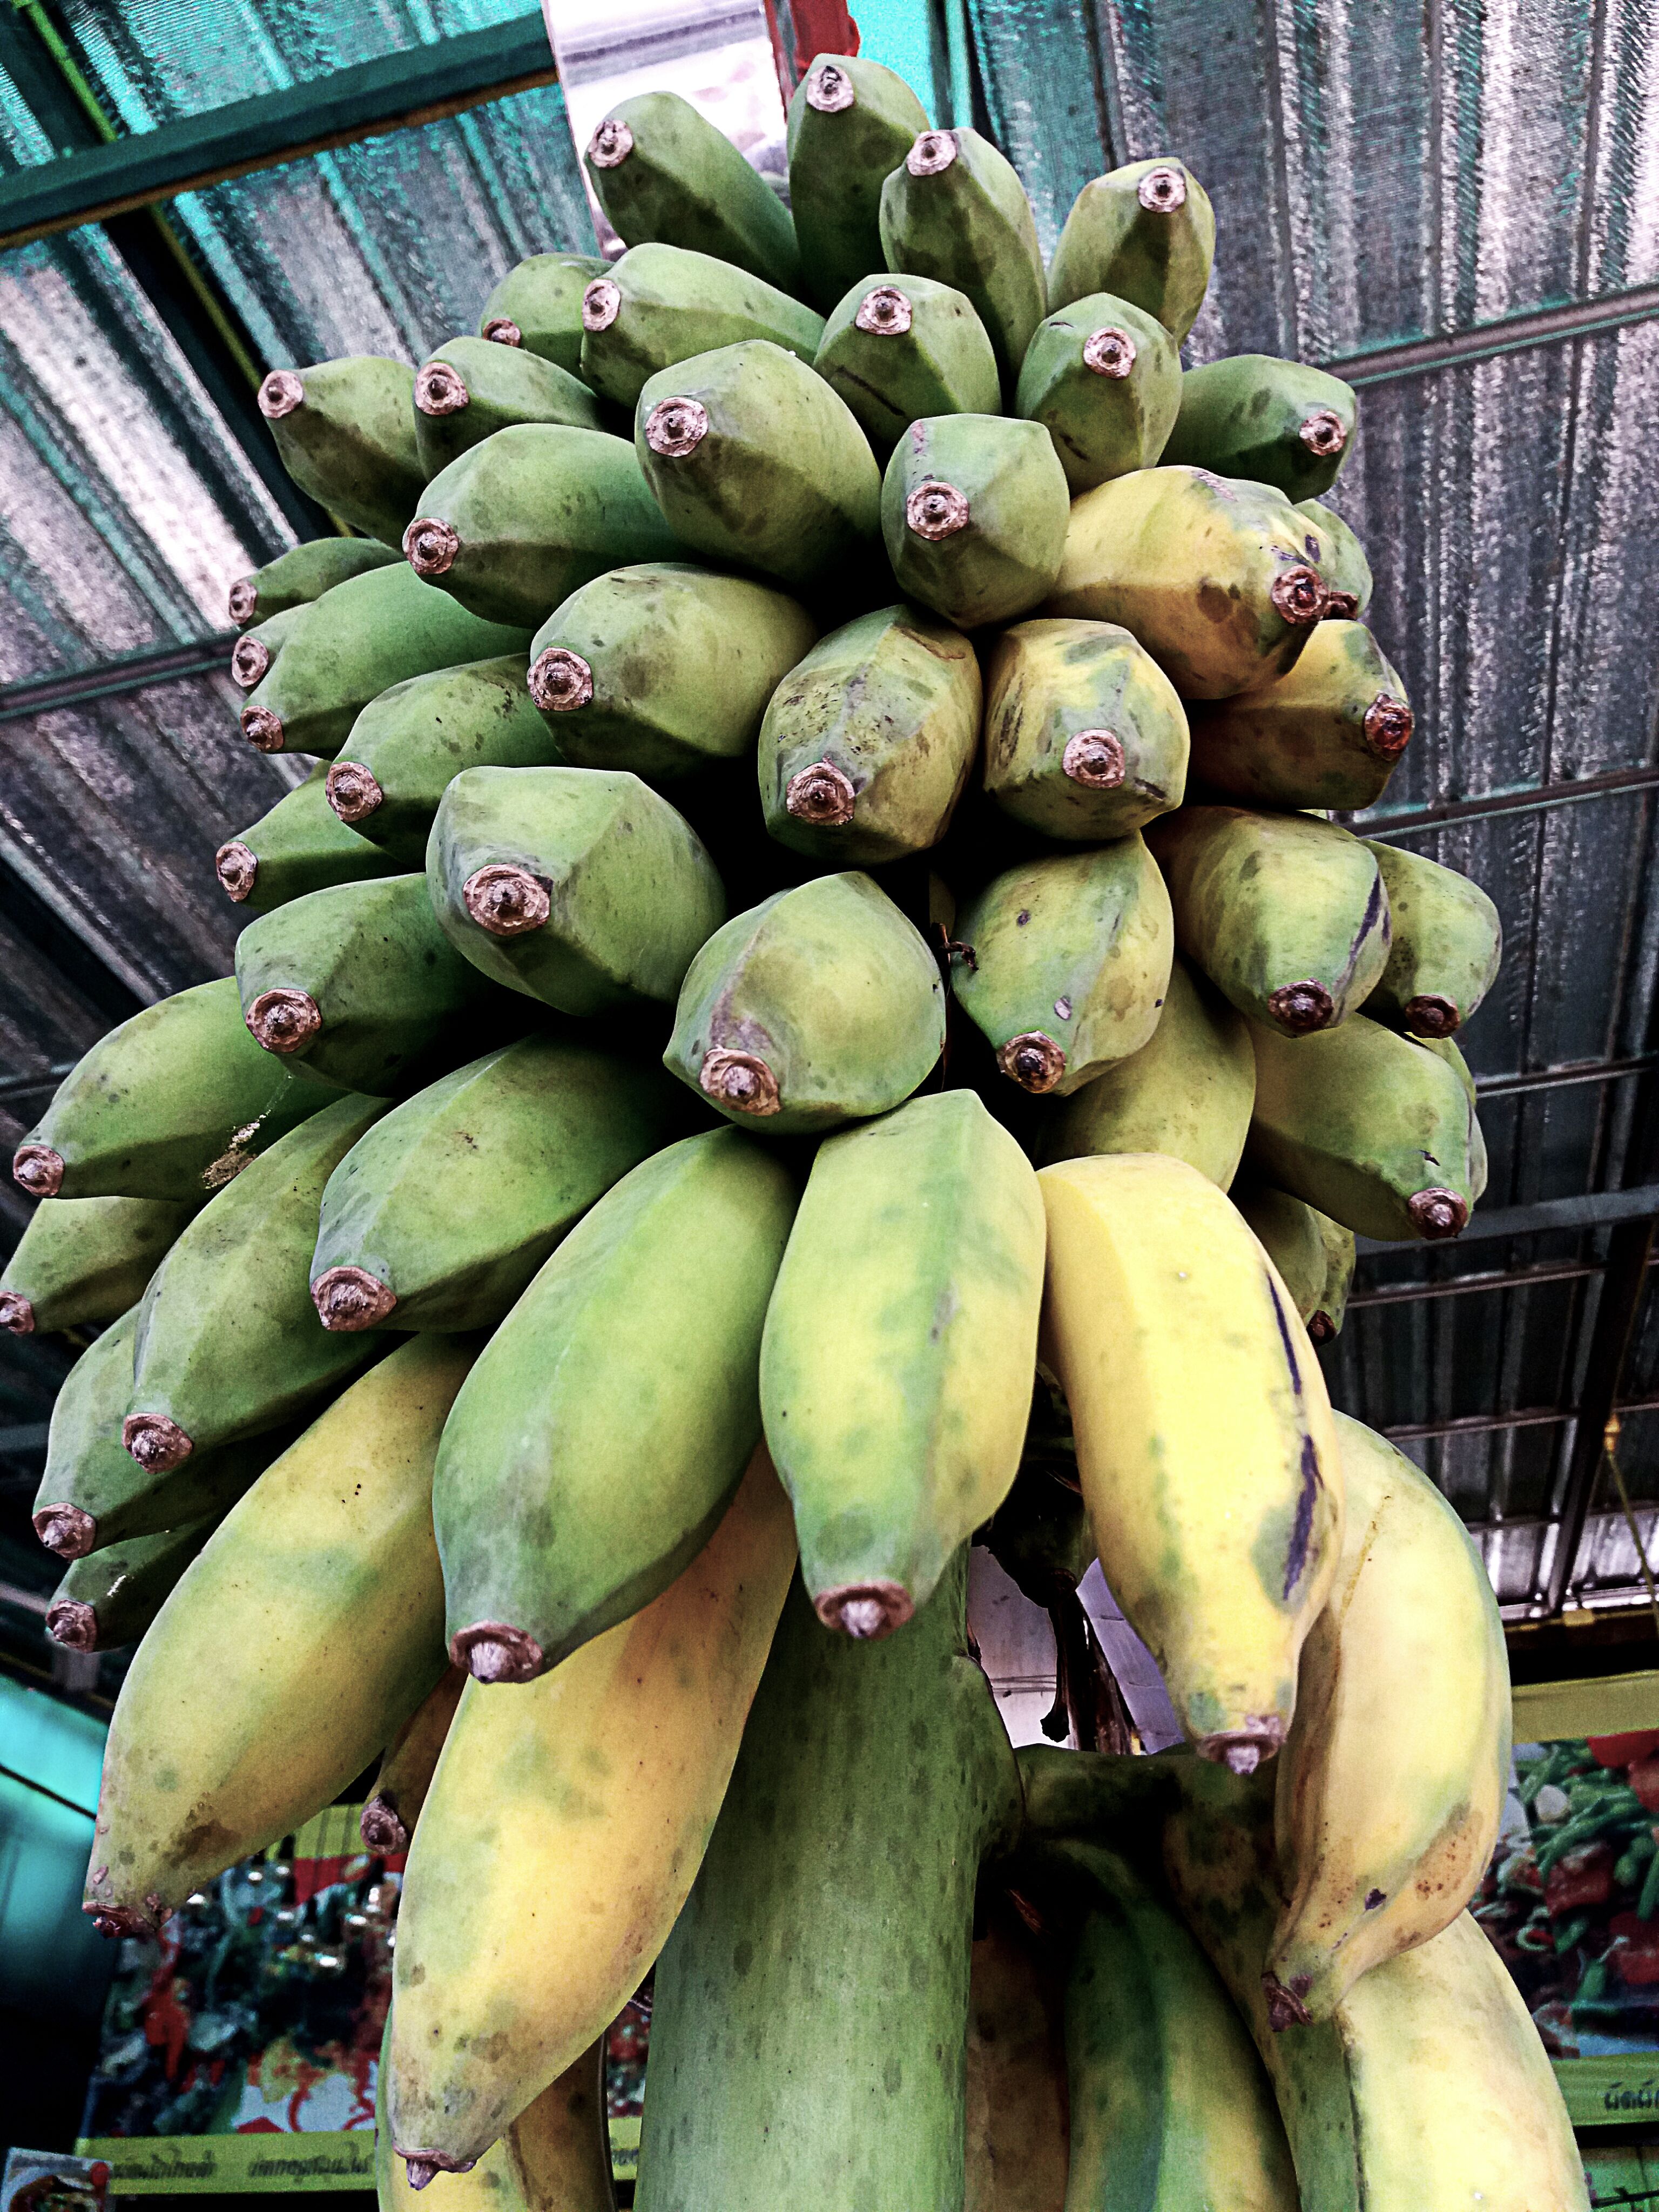 bunch of bananas.jpg